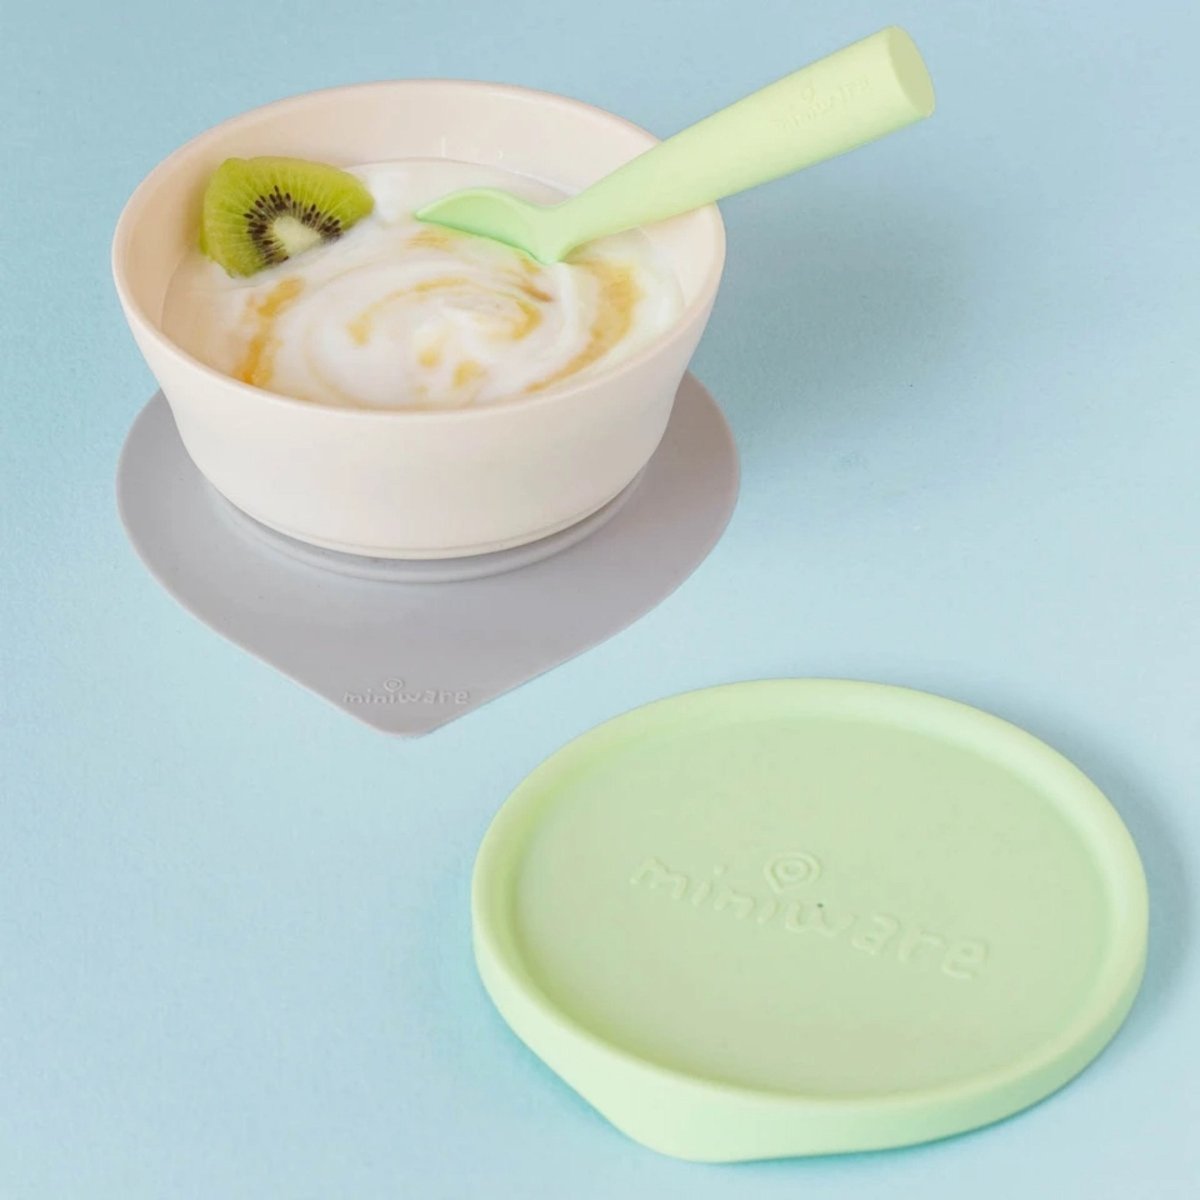 Miniware Suction Bowl With Spoon- Key Lime - MWFBKK